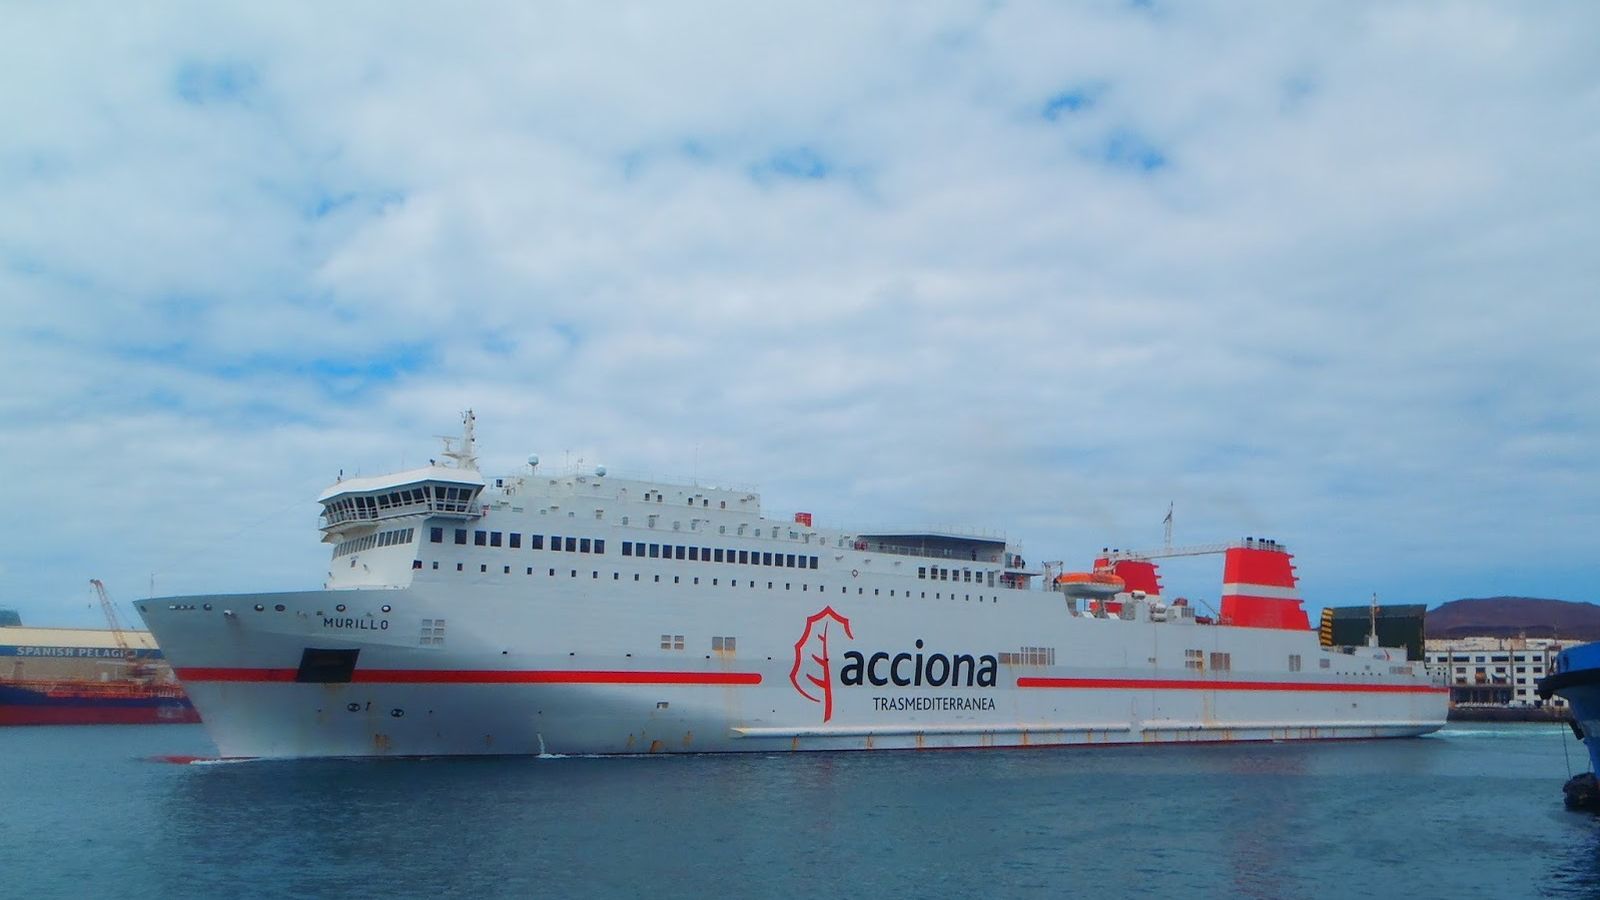 Foto: Ferry de Acciona Trasmediterránea.